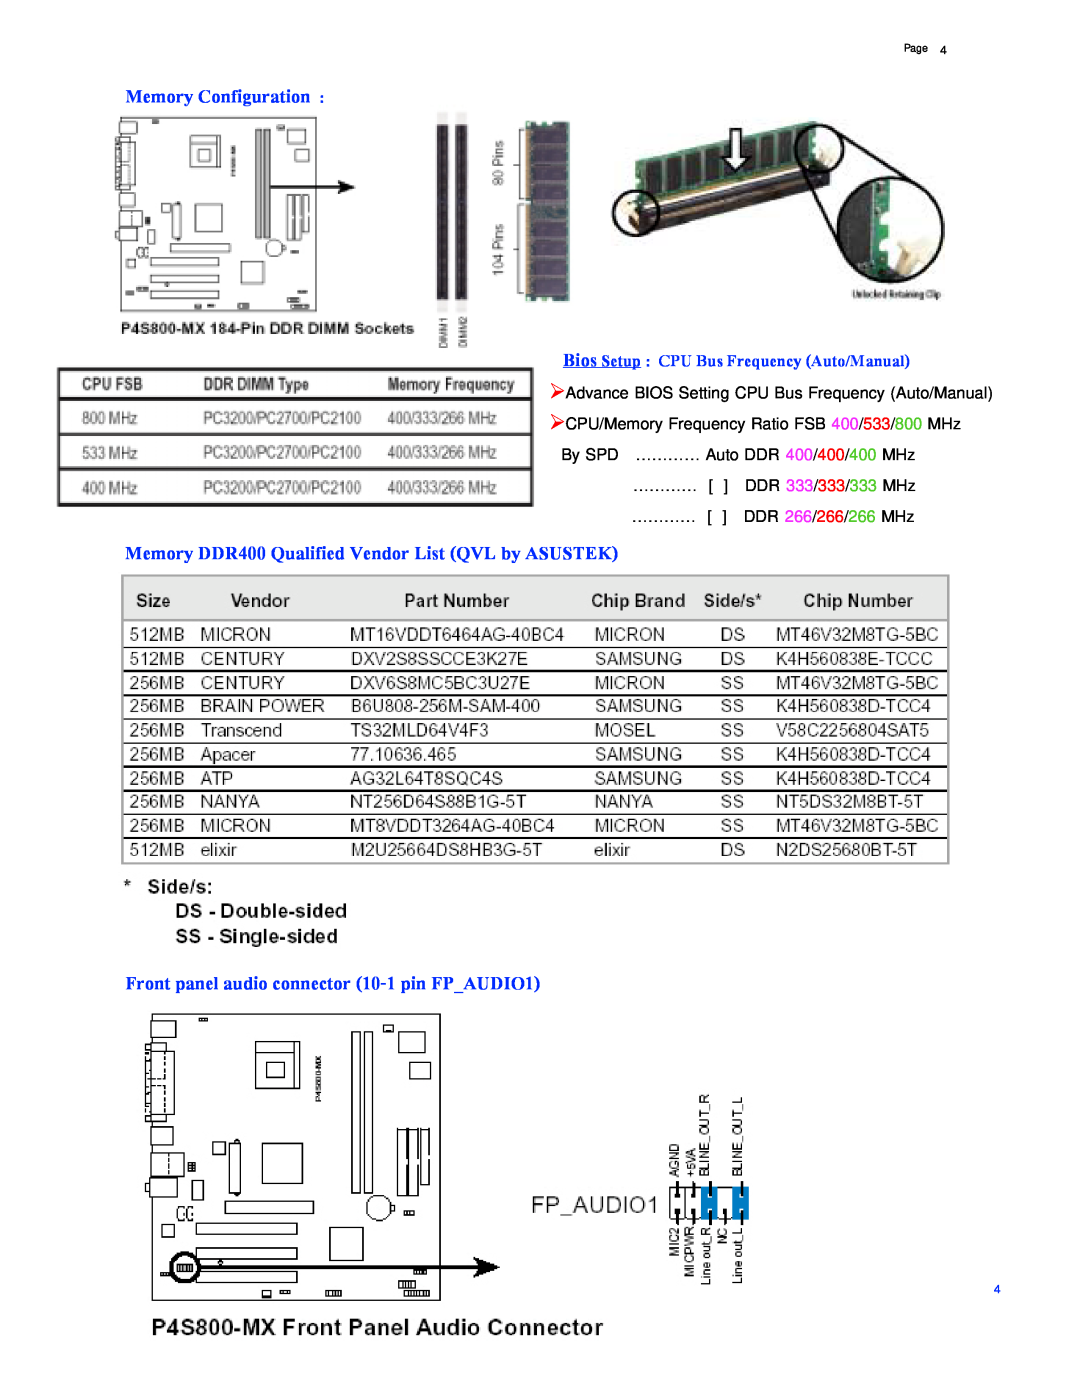 Asus P4S800-MX manual Memory Configuration, Memory DDR400 Qualified Vendor List QVL by ASUSTEK, Page 